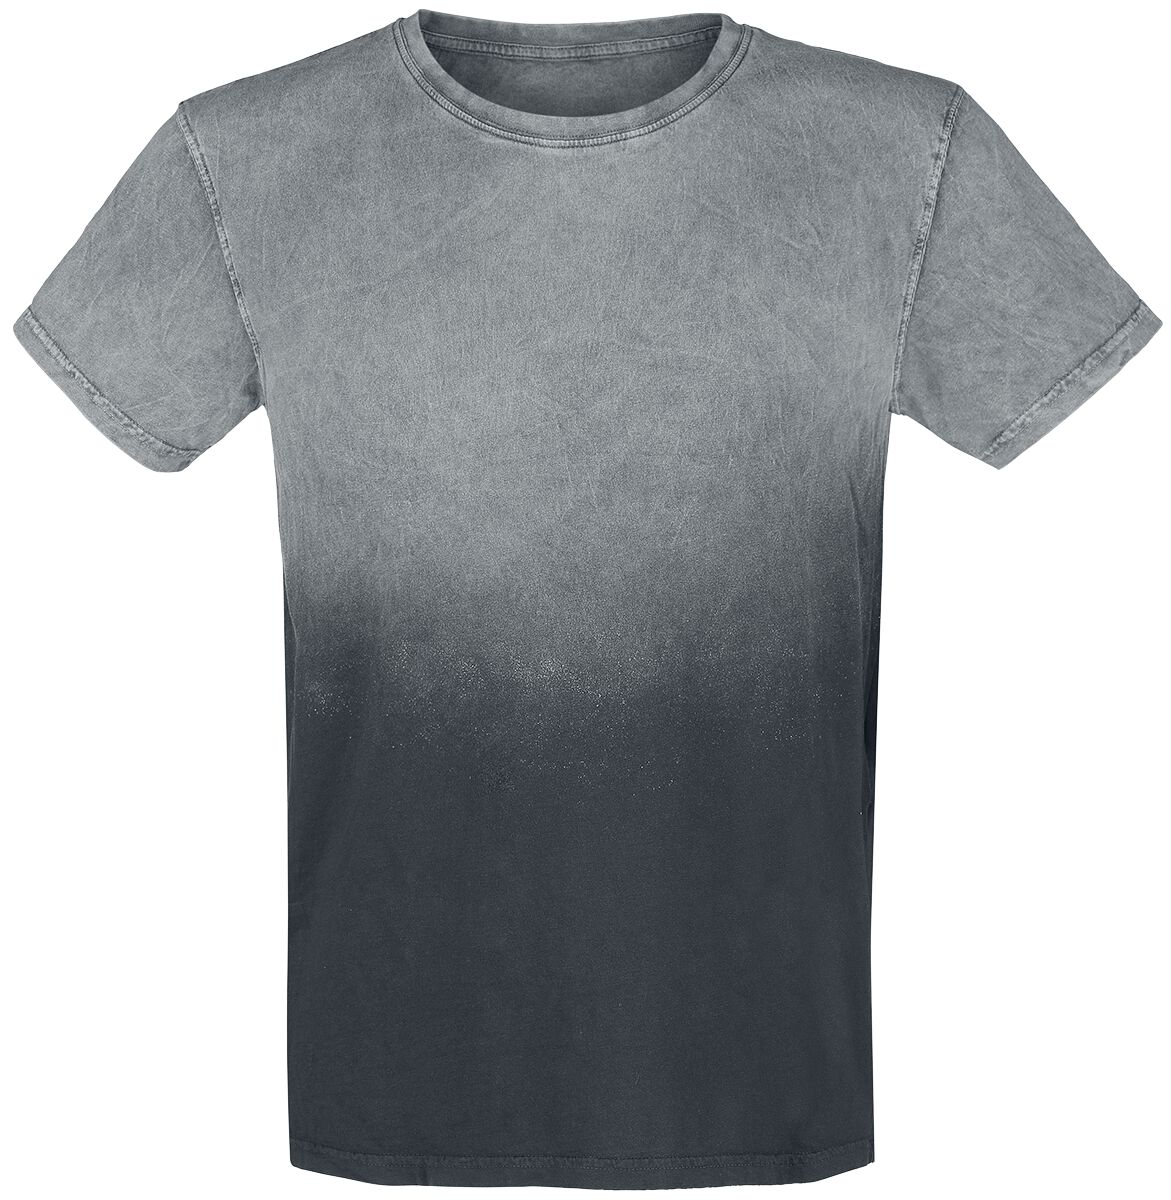 Outer Vision Man's T-Shirt Caldero T-Shirt schwarz grau 1650-OV Man's T-Shirt Caldero Calipo Grey